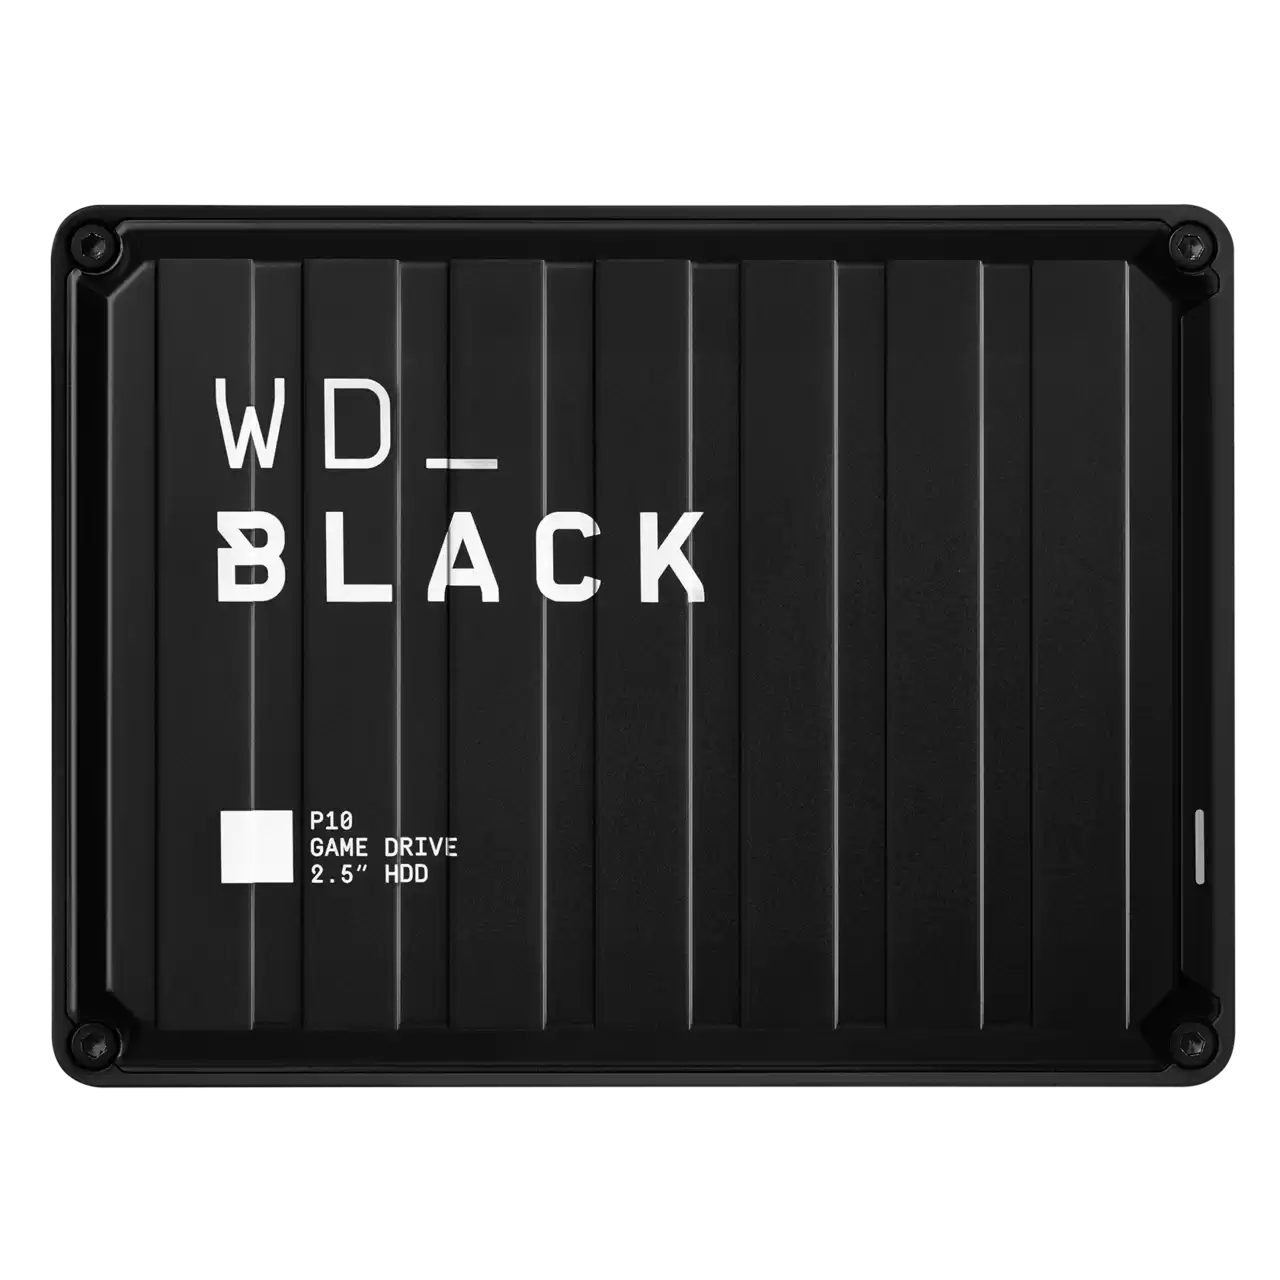 Western Digital WD_BLACK P10 Game Drive